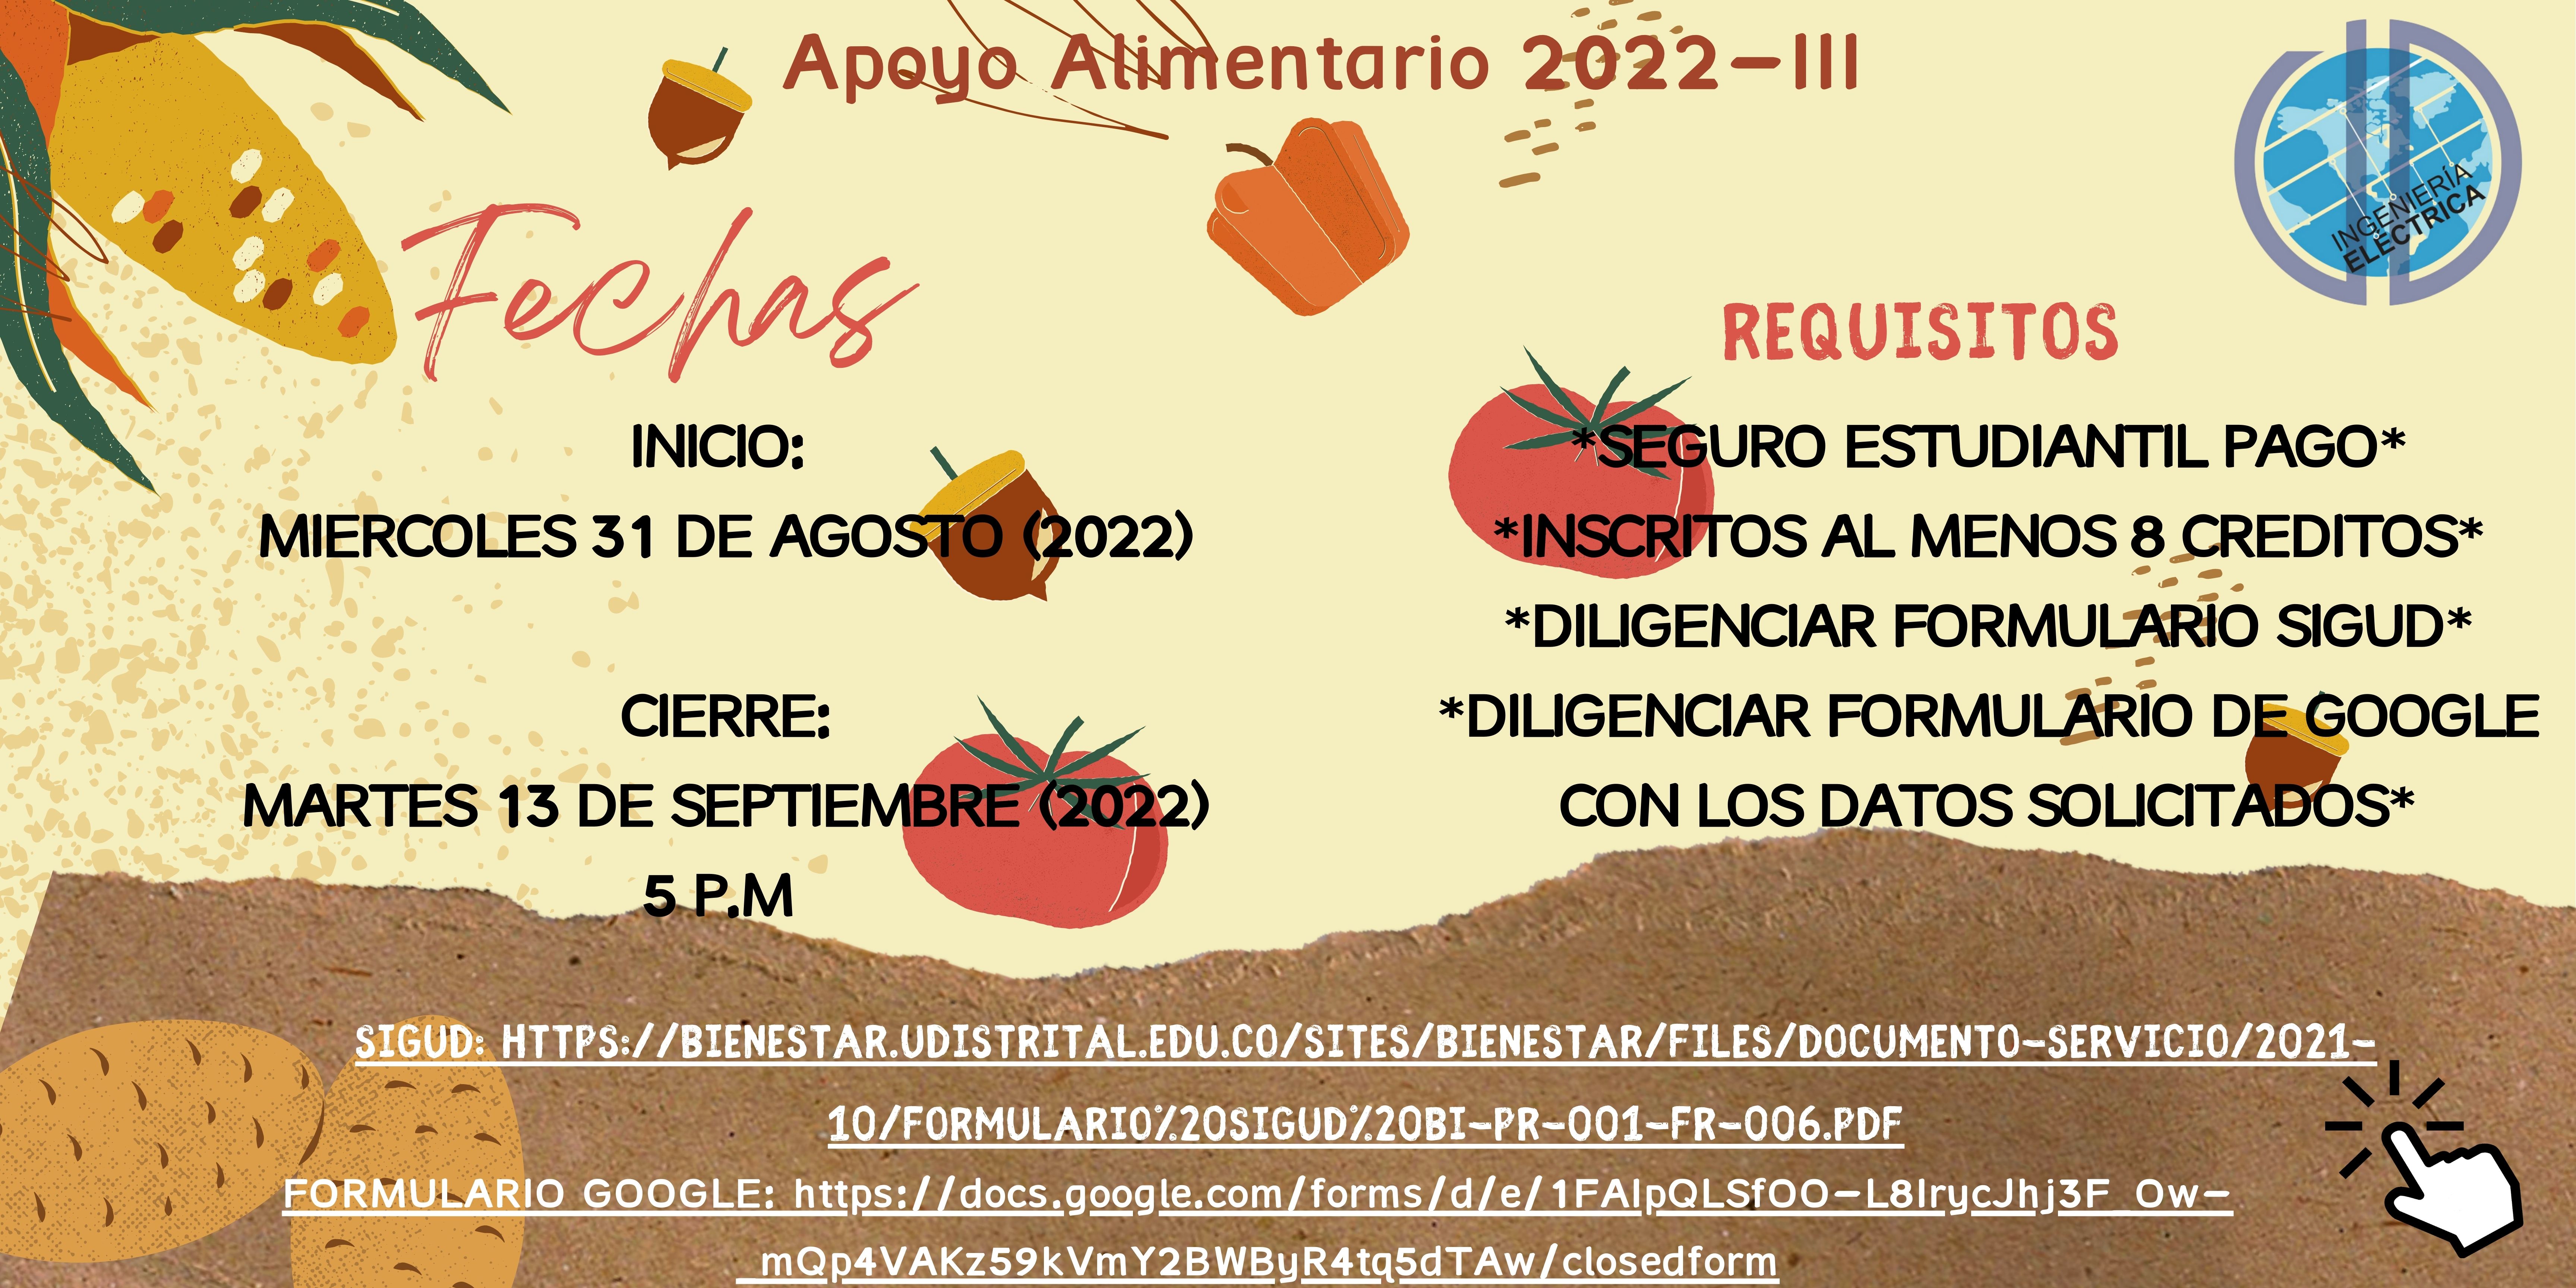 Adjunto Apoyo Alimentaio 2022-III.jpg